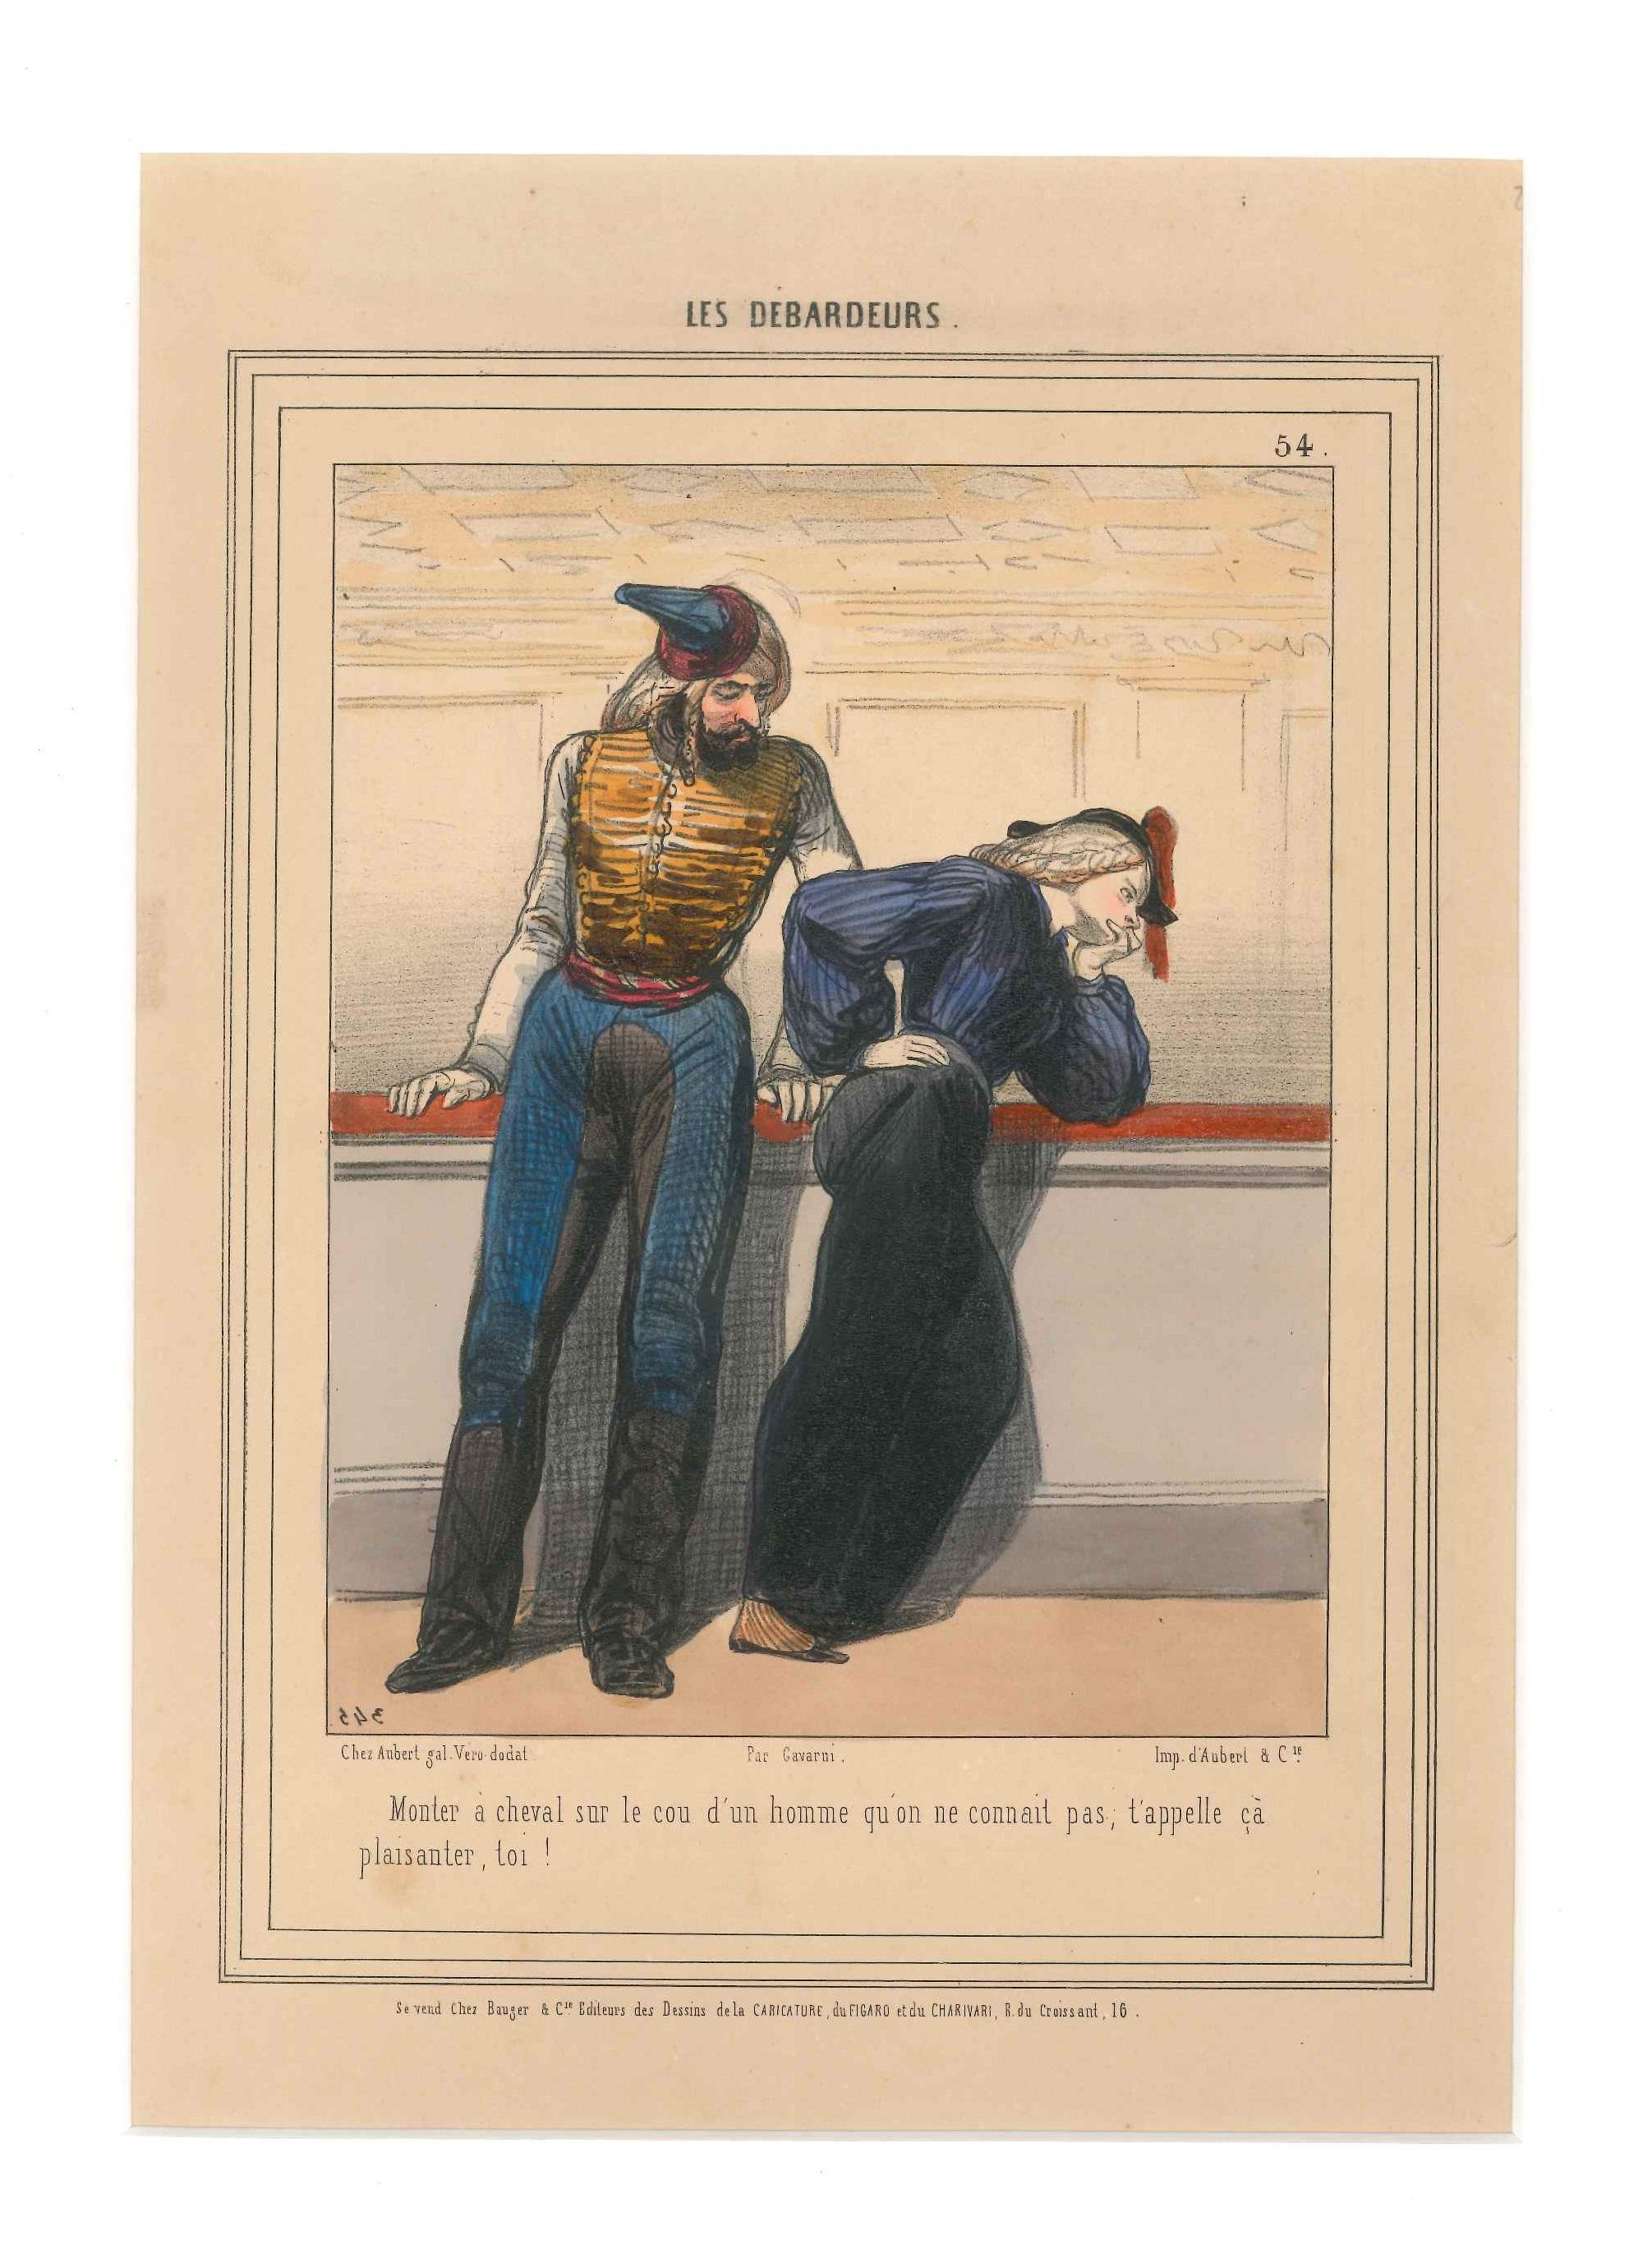 Paul Gavarni (Guillaume Sulpice Chevalier) Figurative Print - Les Débardeurs - Lithograph by Paul Gavarni - 1848